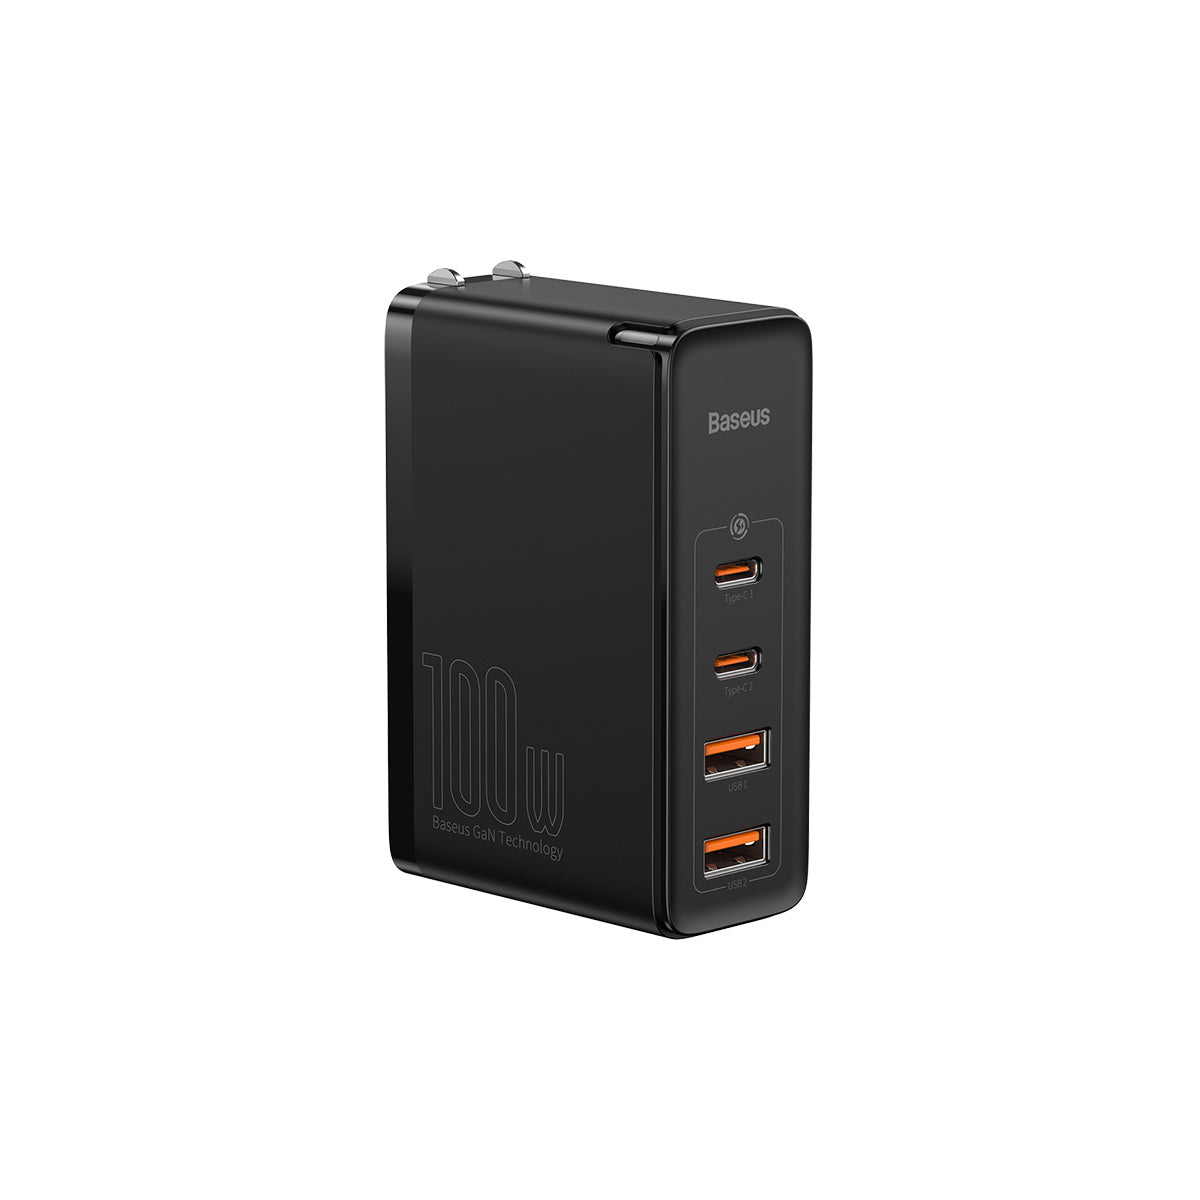 Baseus - Powerbank und KFZ-Starthilfe (500W/220V) - USB / USB-C